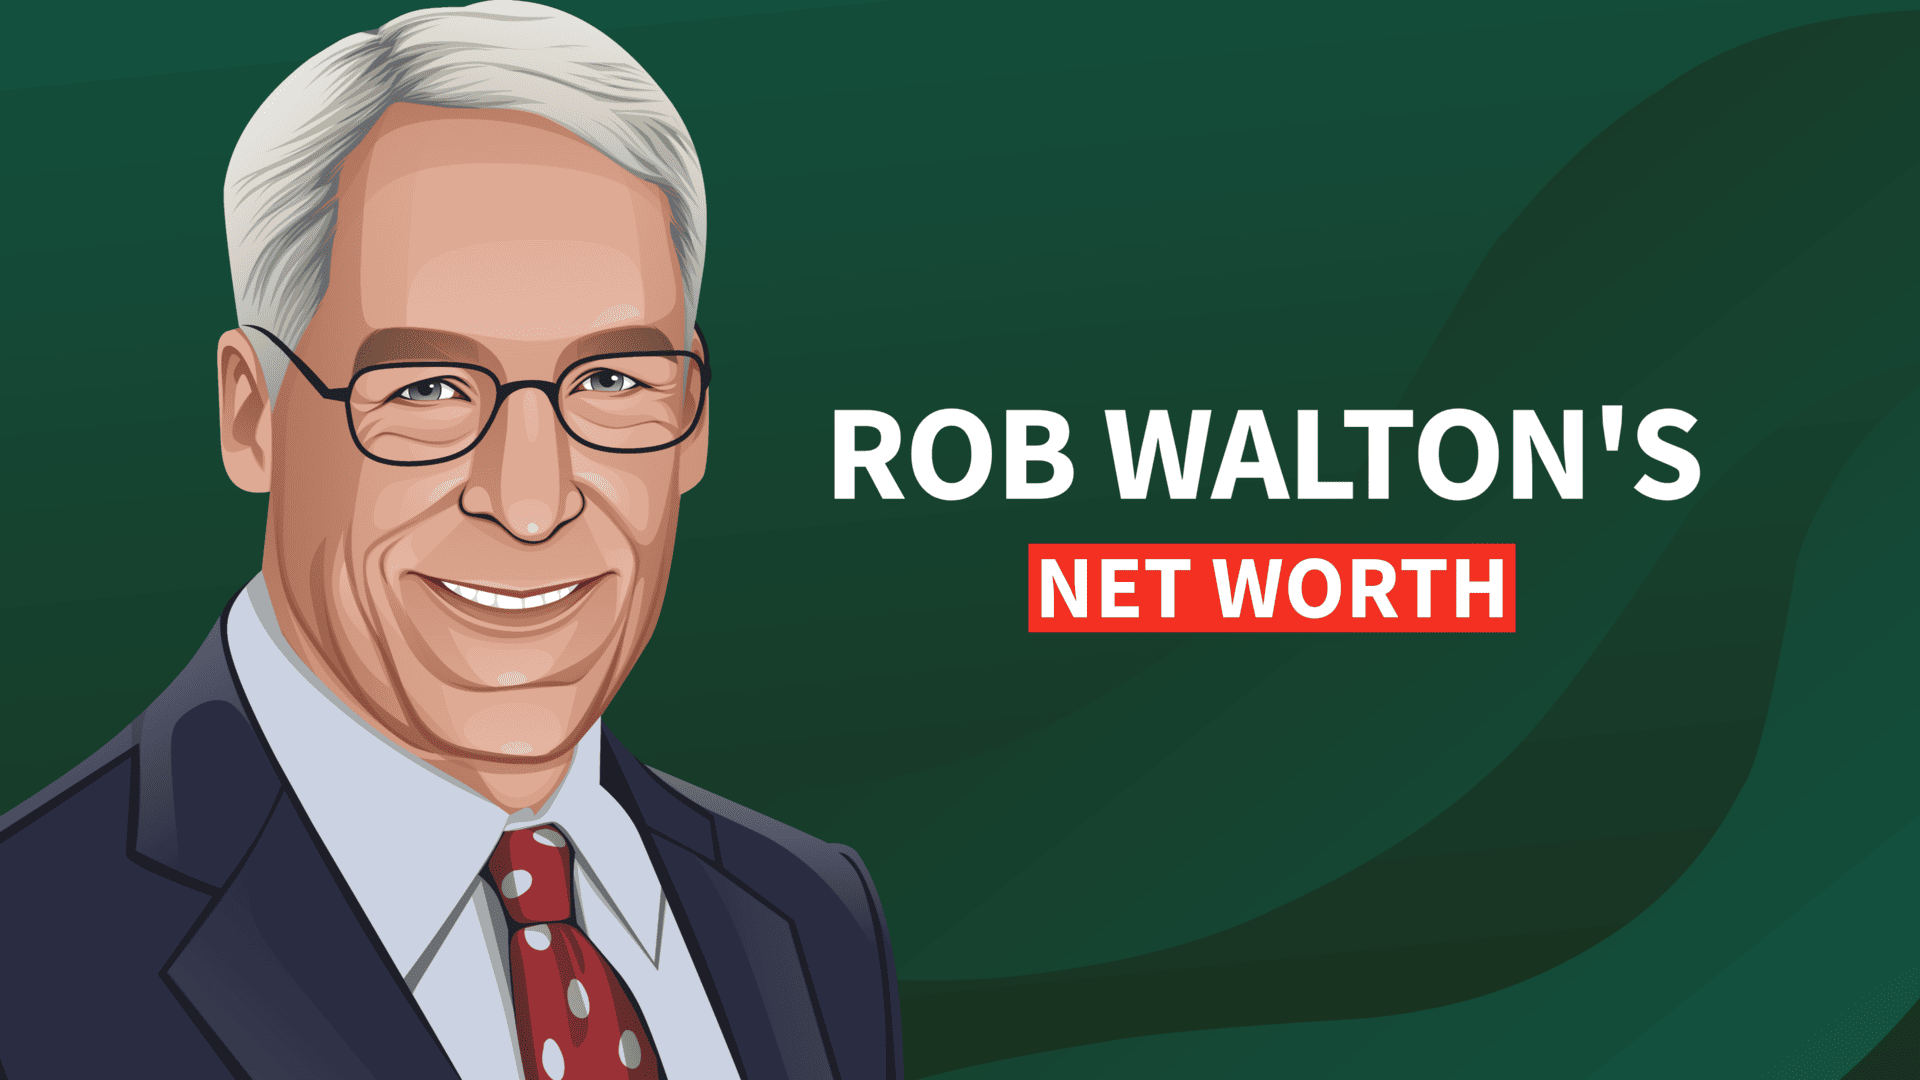 Rob Walton's net worth